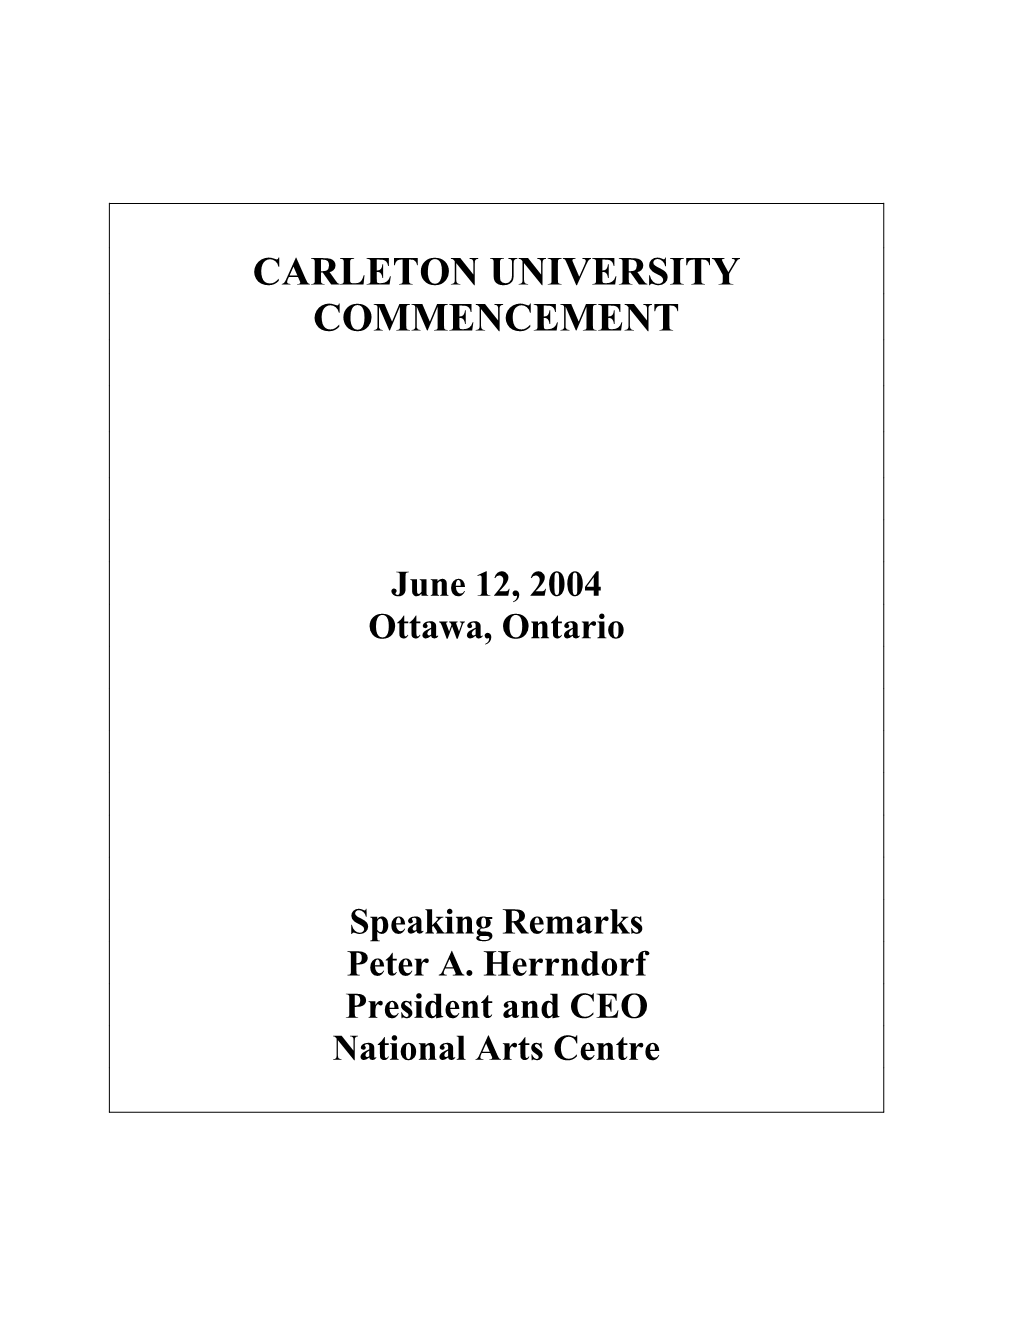 Carleton University Commencement